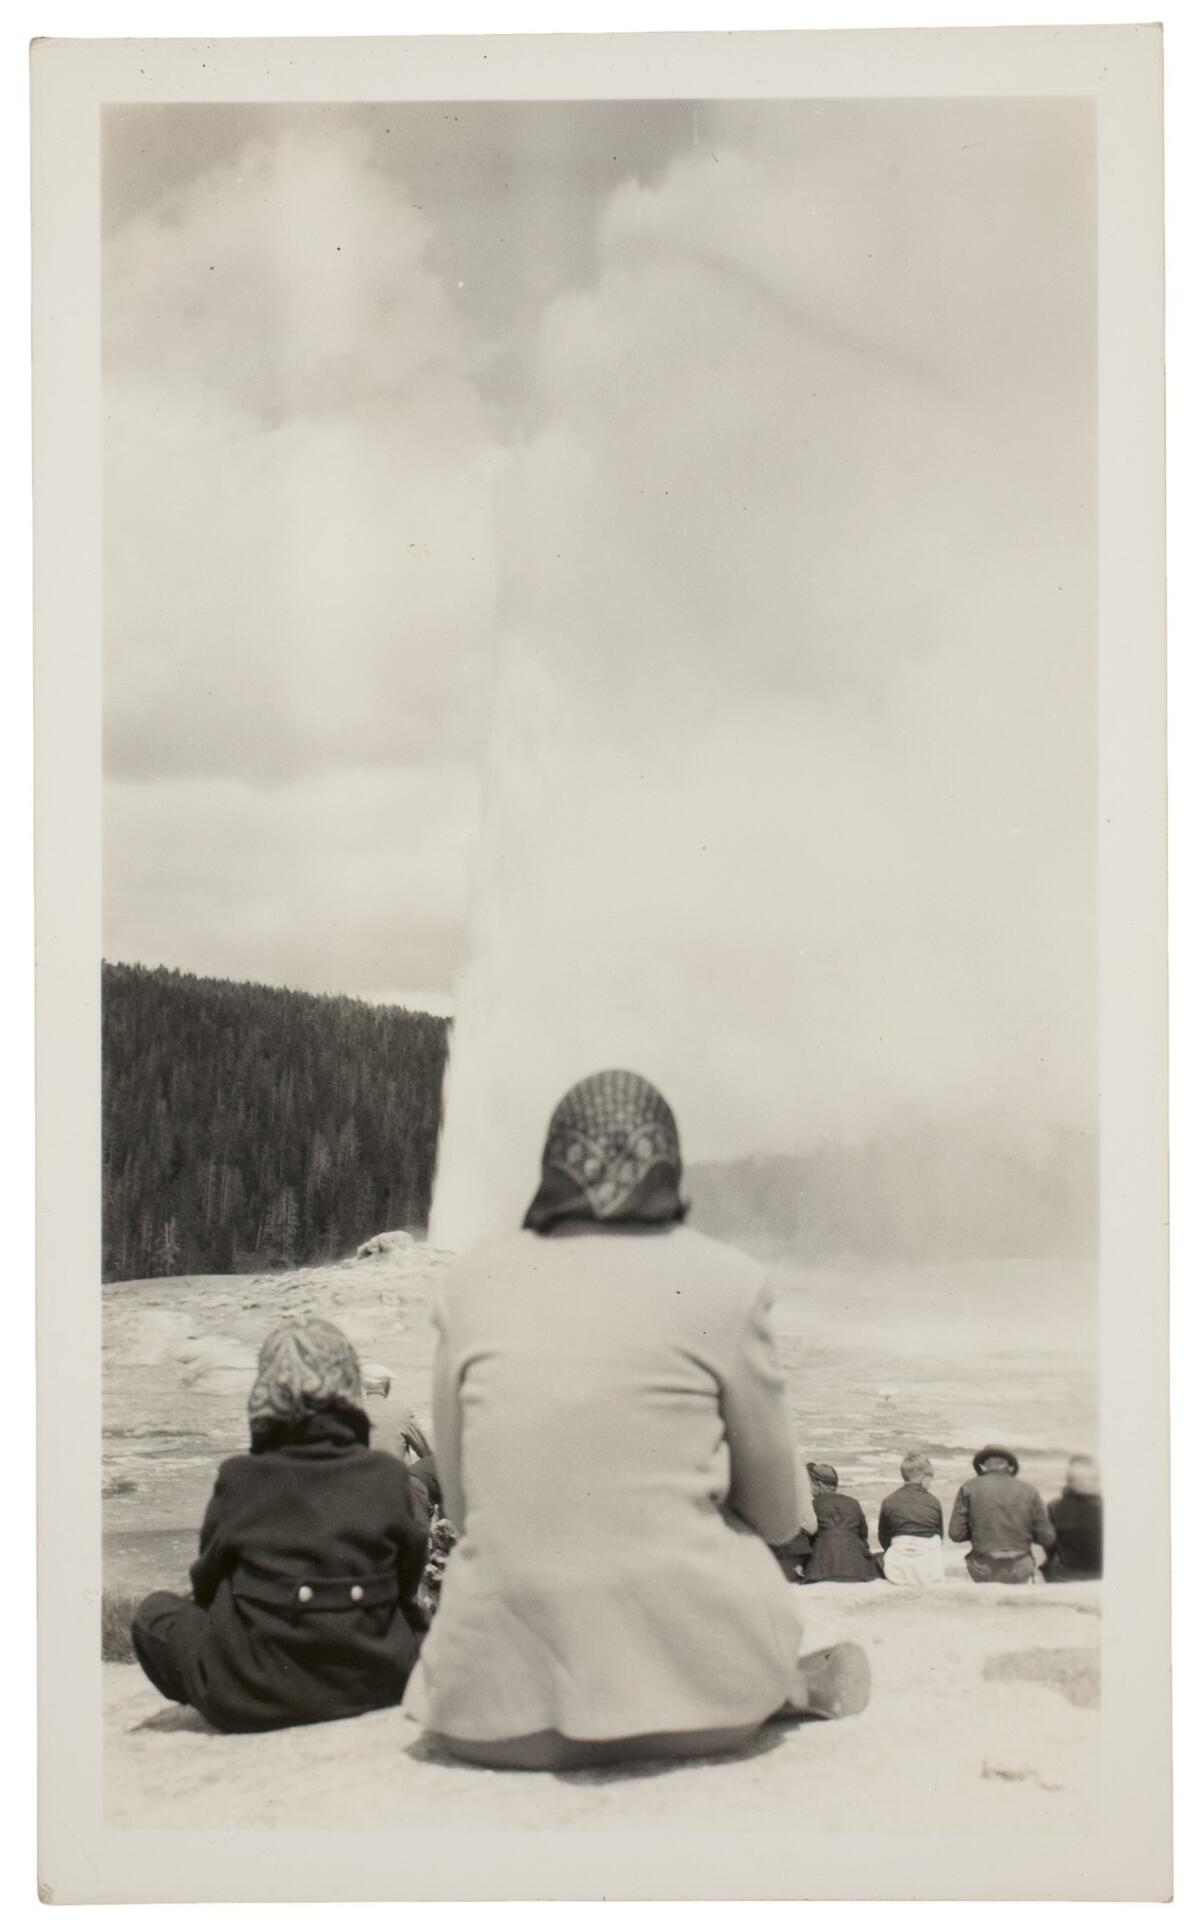 Fotógrafo desconocido, Géiser Old Faithful, Parque Nacional de Yellowstone, junio de 1940 (cortesía del Museo George Eastman, regalo de Peter J. Cohen).